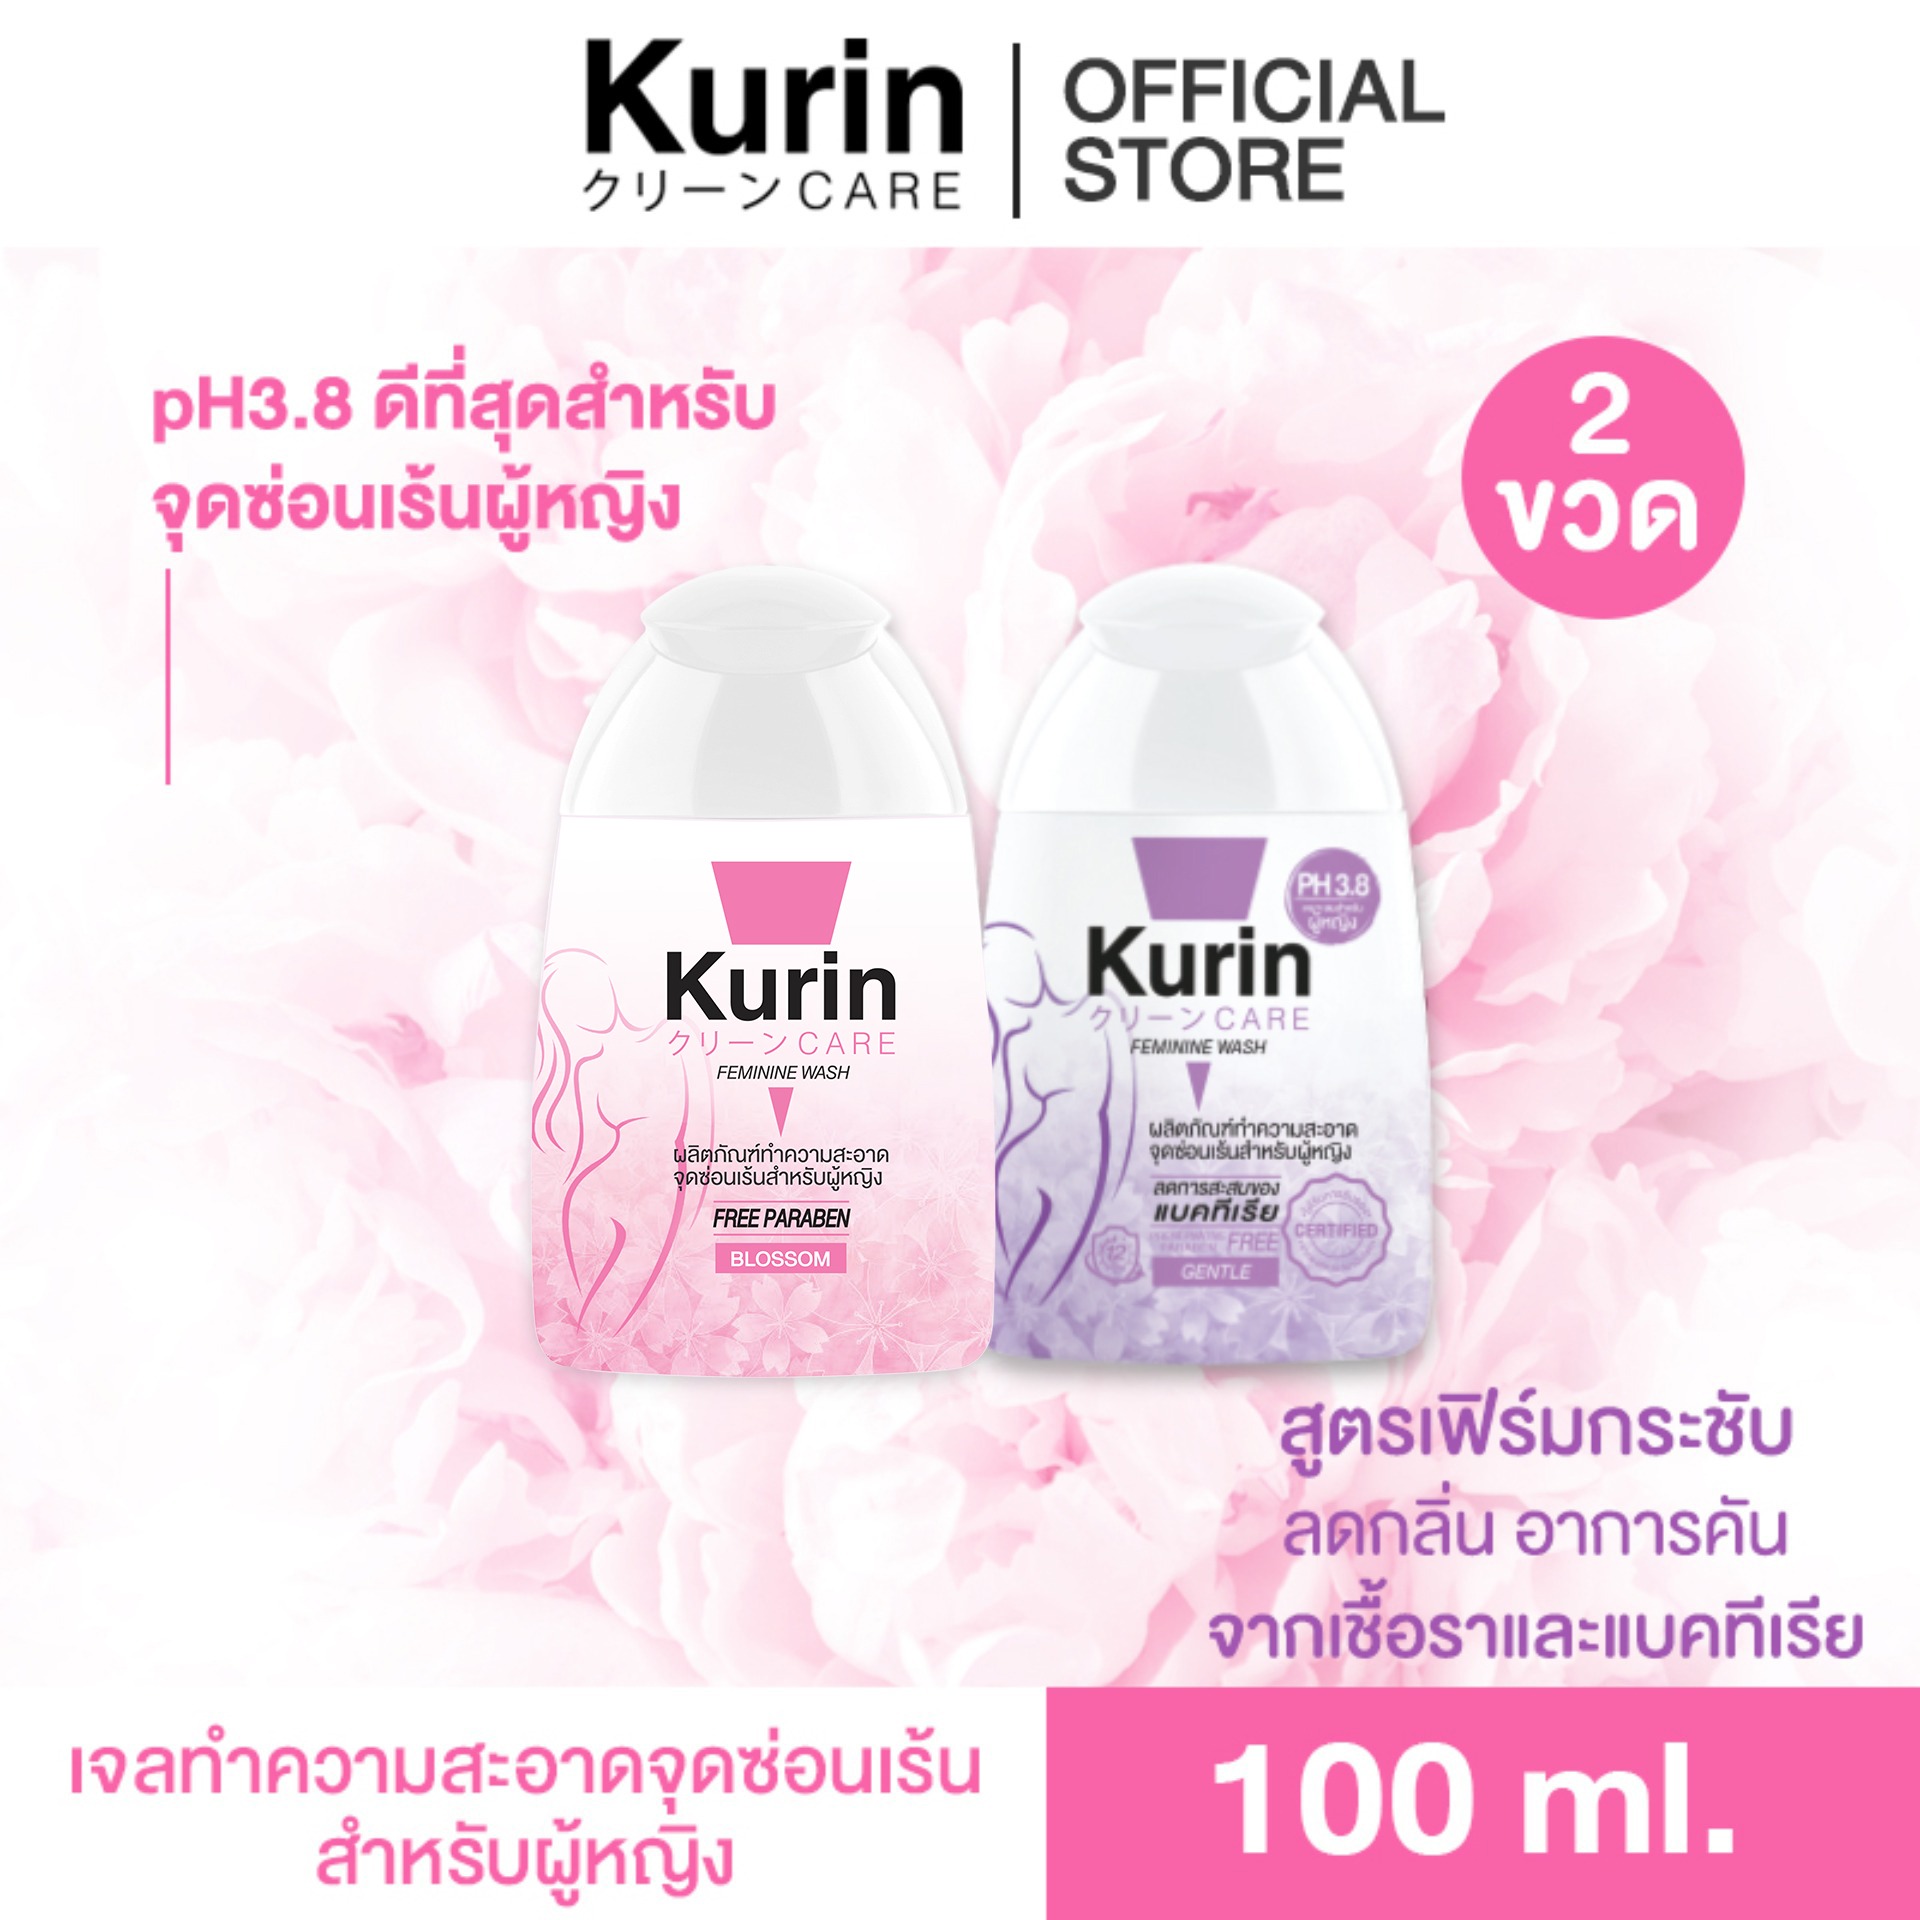 Kurin care feminine wash ph3.8 เจลทำความสะอาดจุดซ่อนเร้นสำหรับผู้หญิง สูตรบลอสซั่ม  และ สูตรสำหรับผิวแห้ง ( ผลิตภัณฑ์ทำความสะอาดเฉพาะจุดซ่อนเร้น)